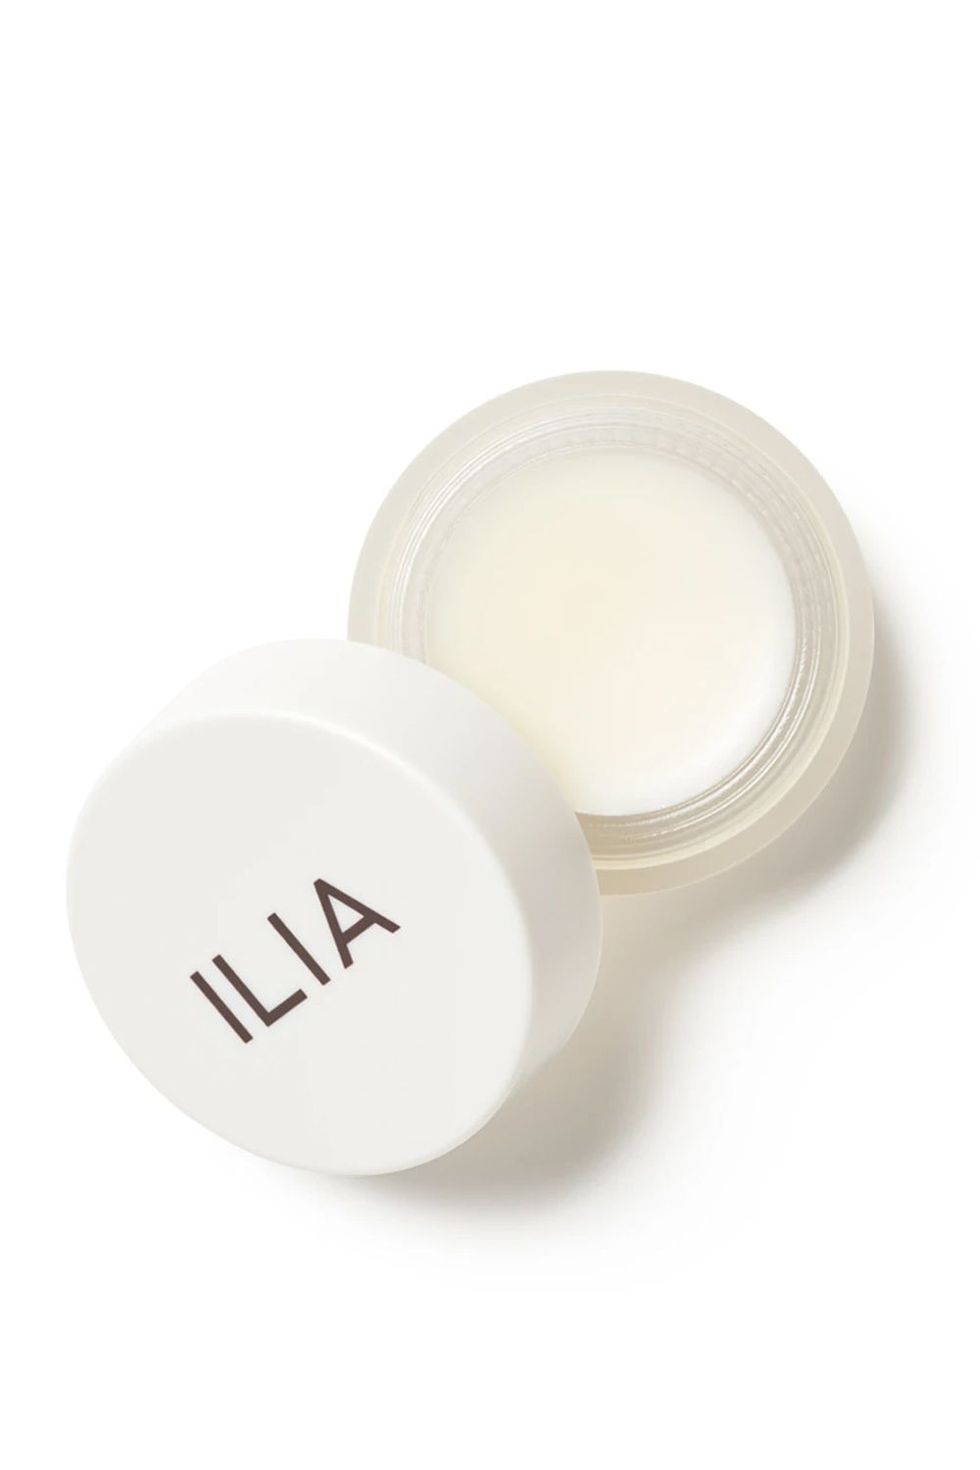 Ilia Lip Wrap Clean Hydrating Lip Mask